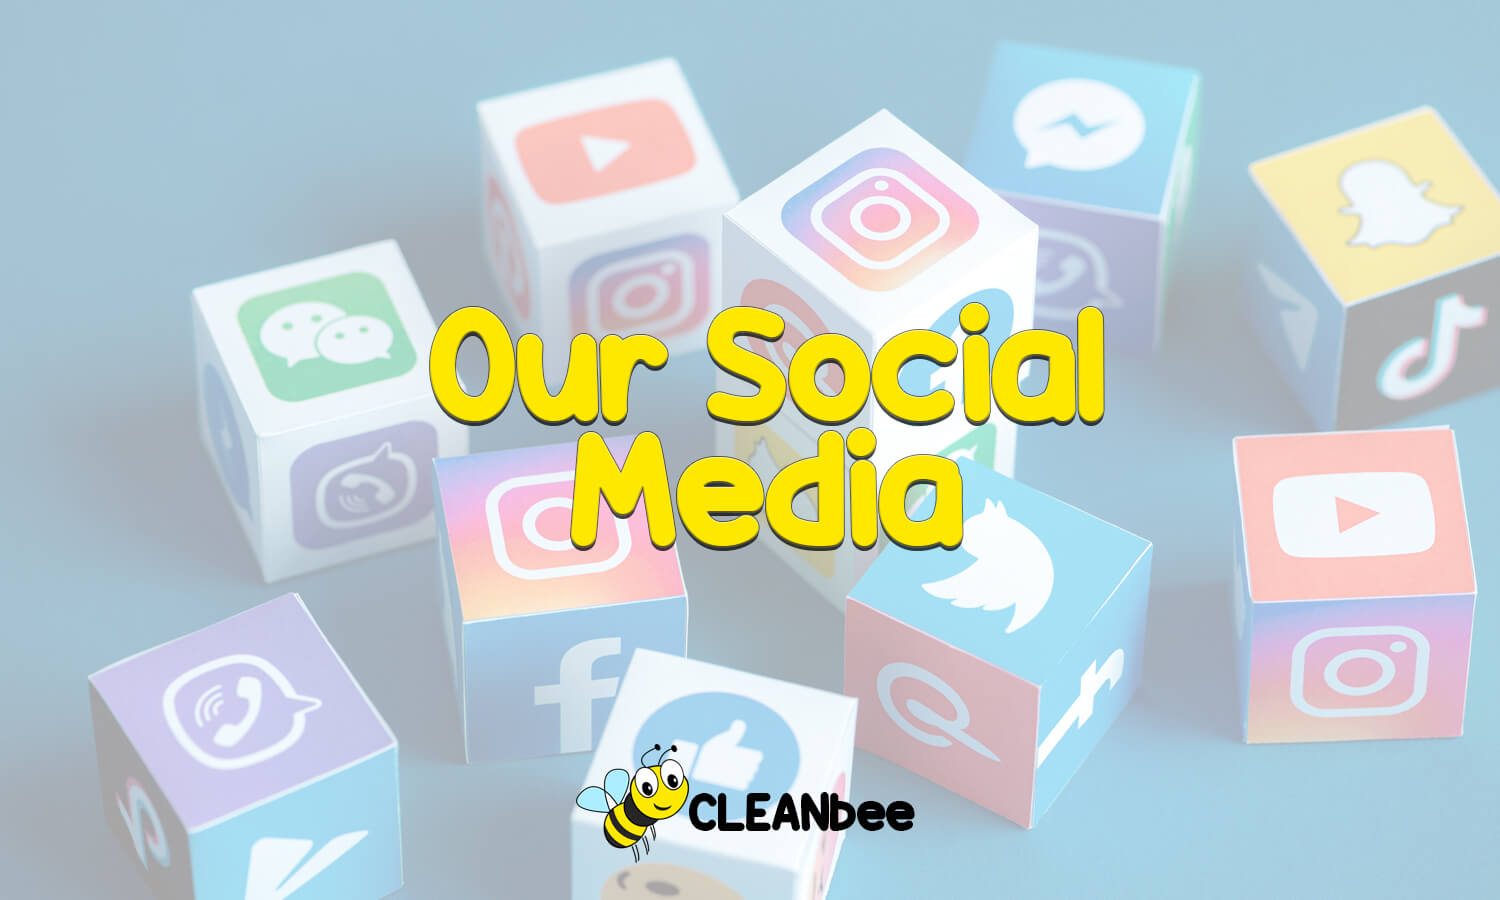 Our Social Media